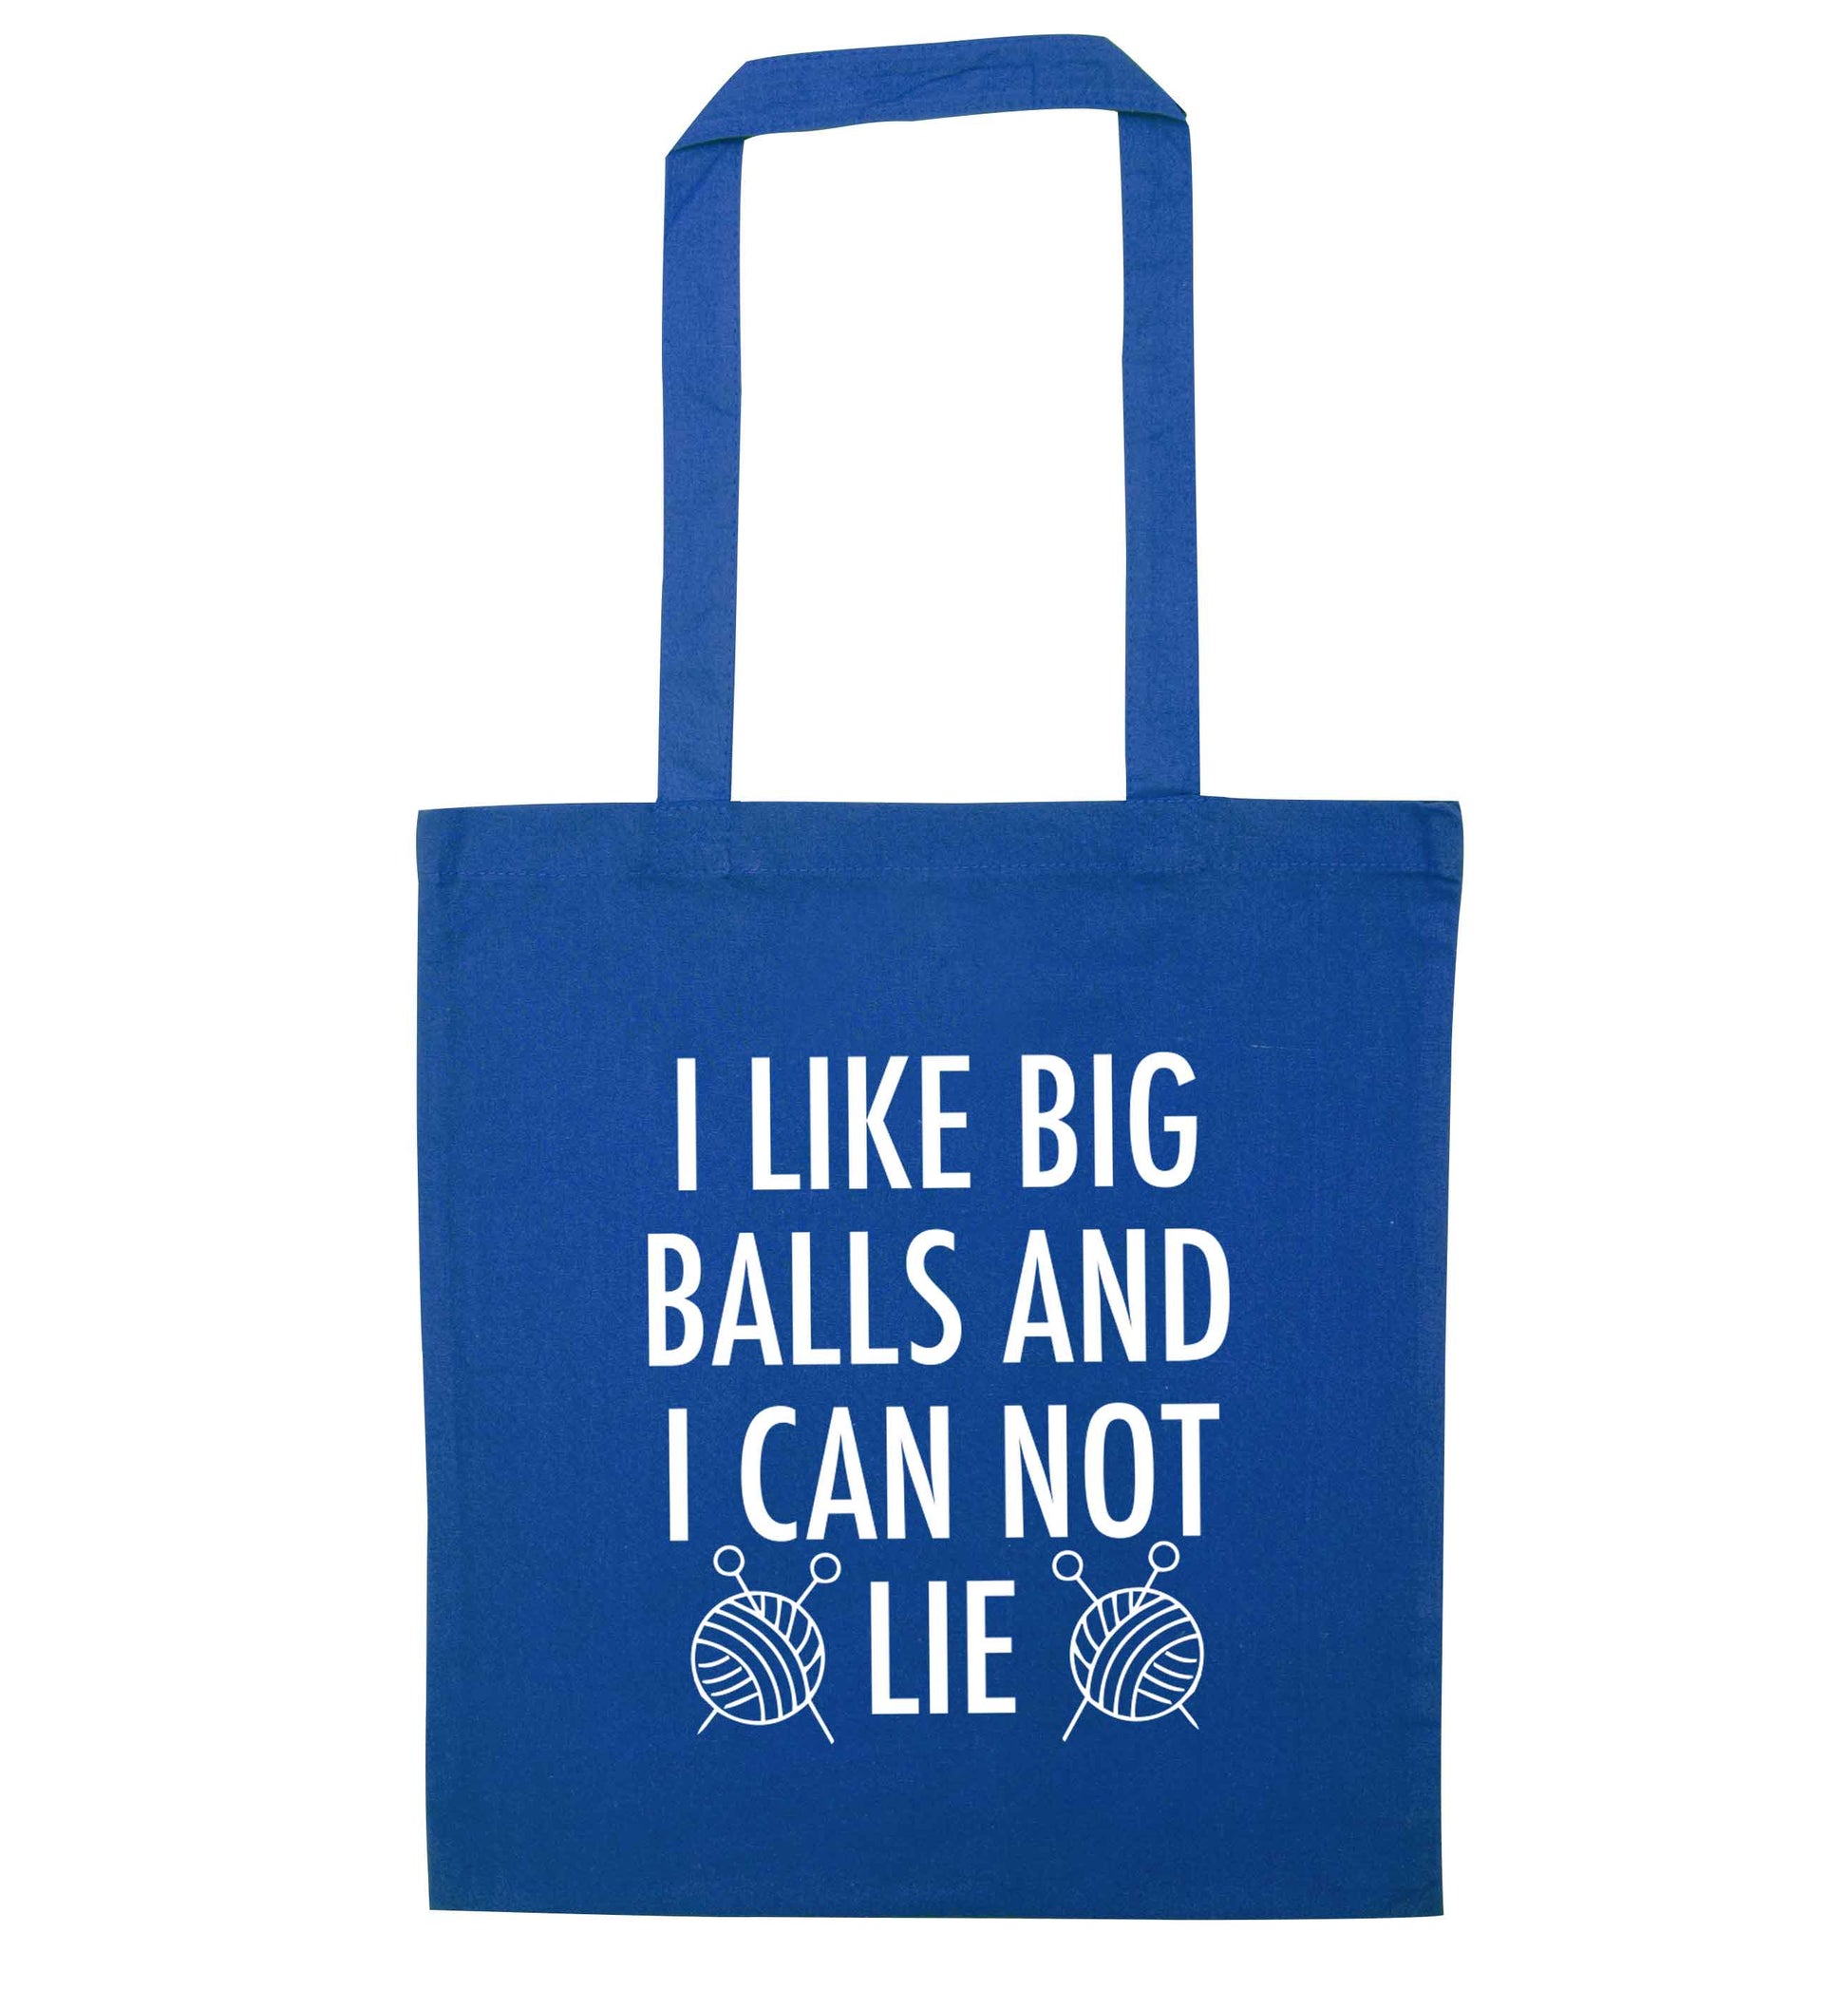 I like big balls and I can not lie blue tote bag